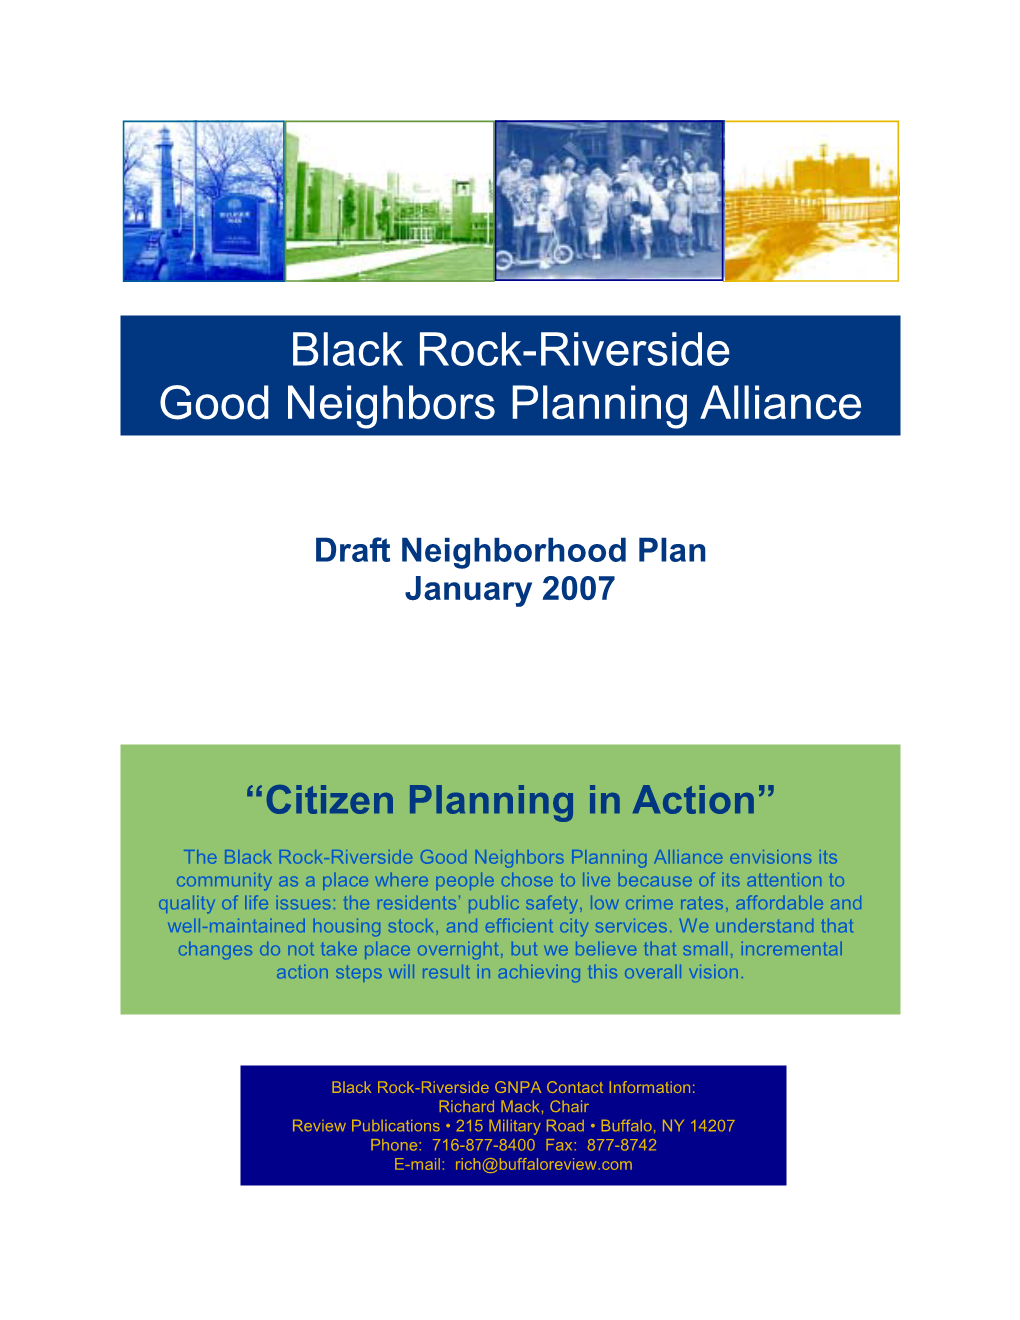 Black Rock-Riverside Good Neighbors Planning Alliance